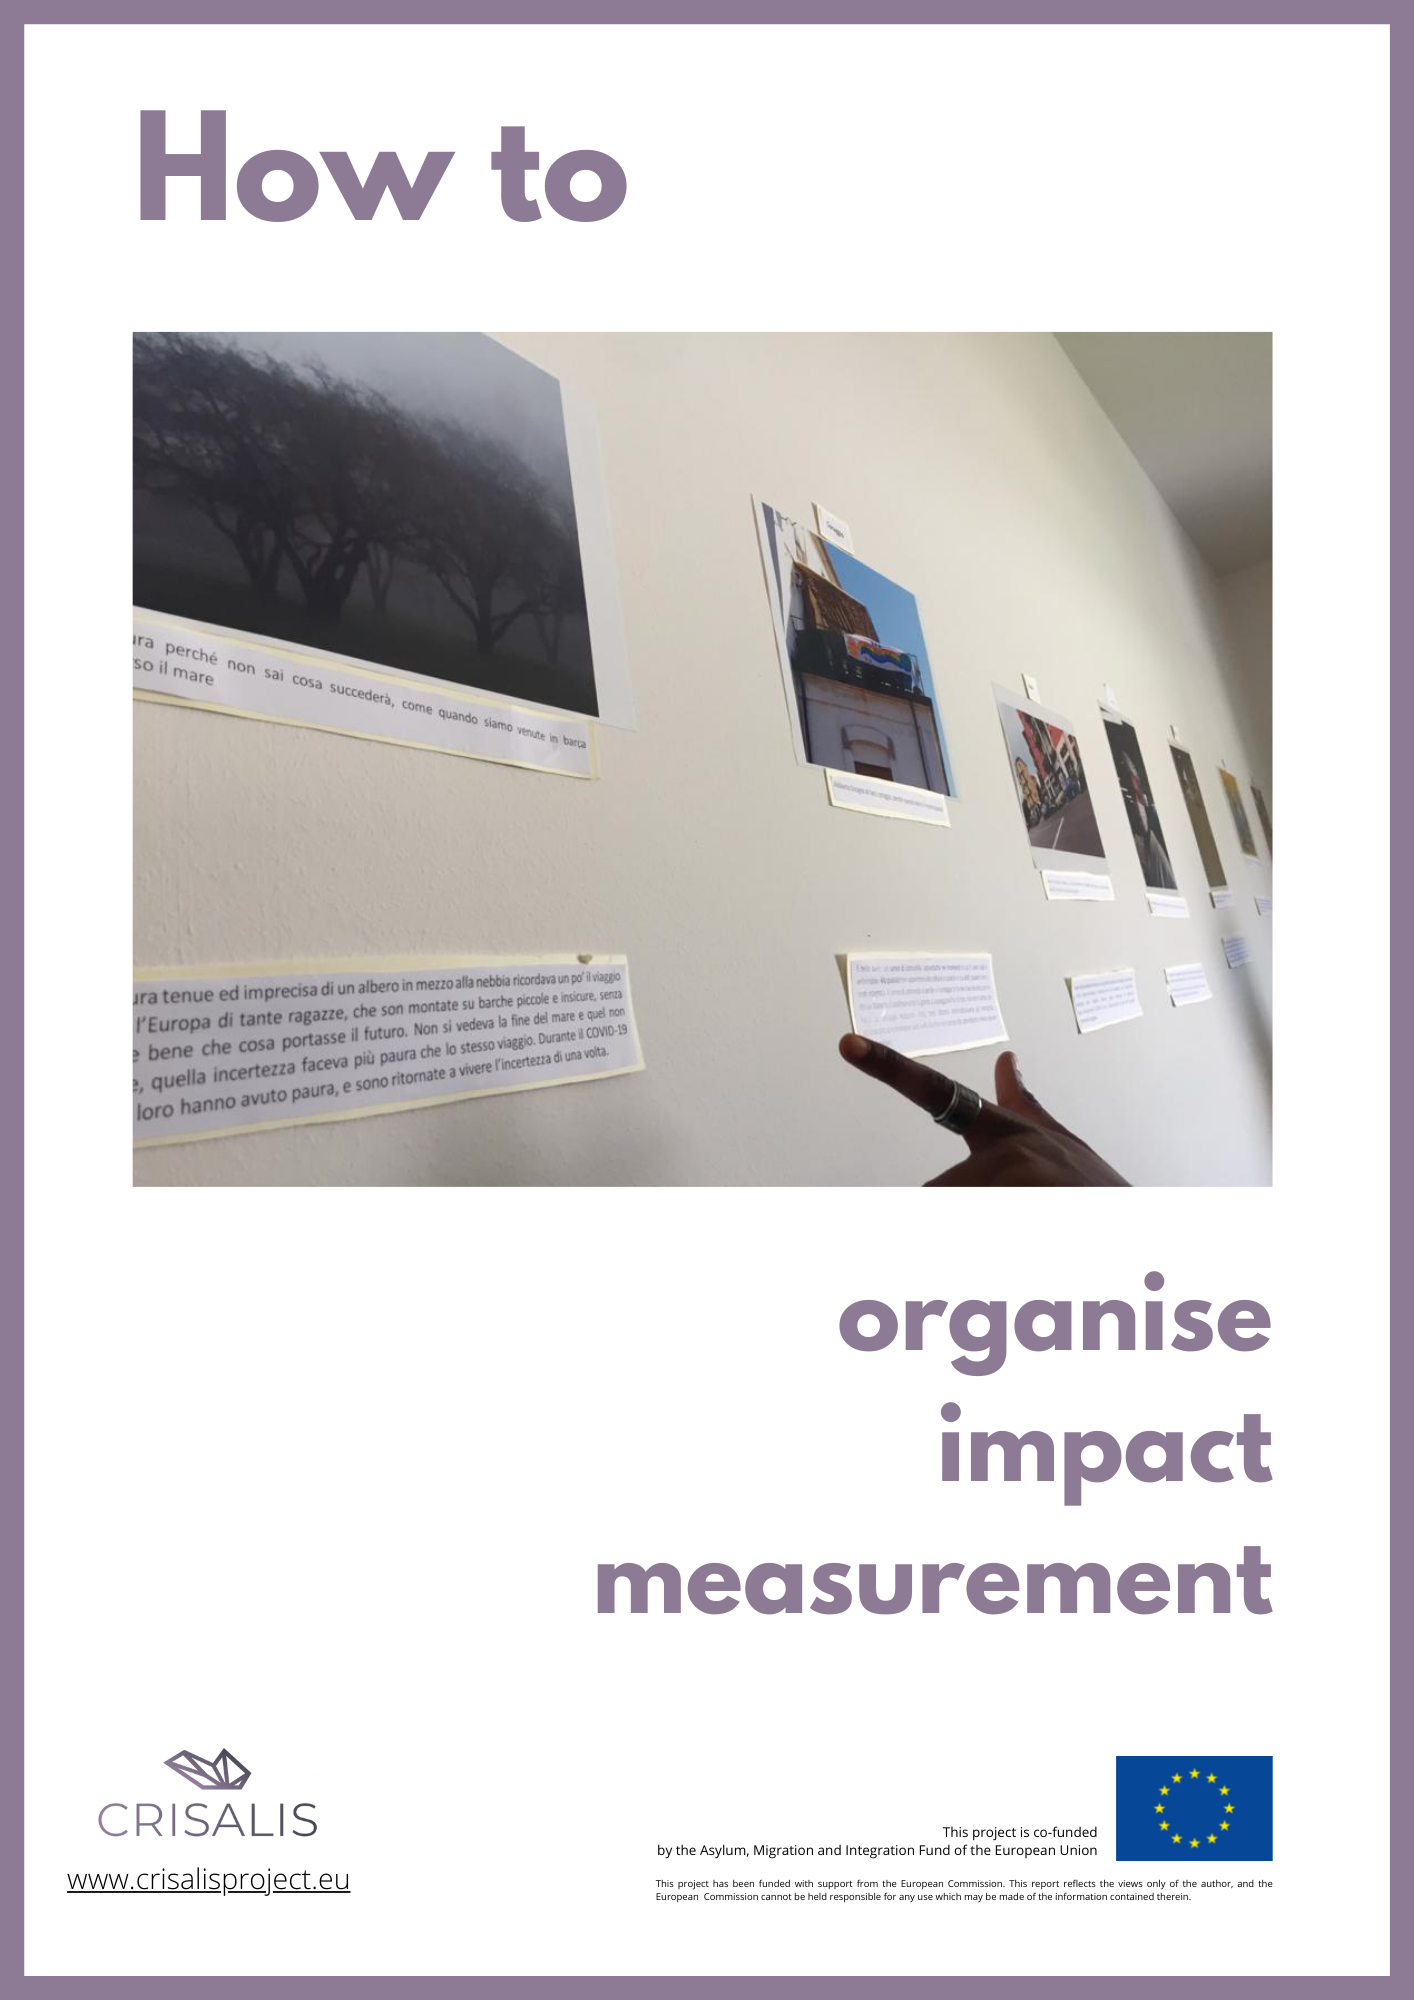 How to organise impact measurement